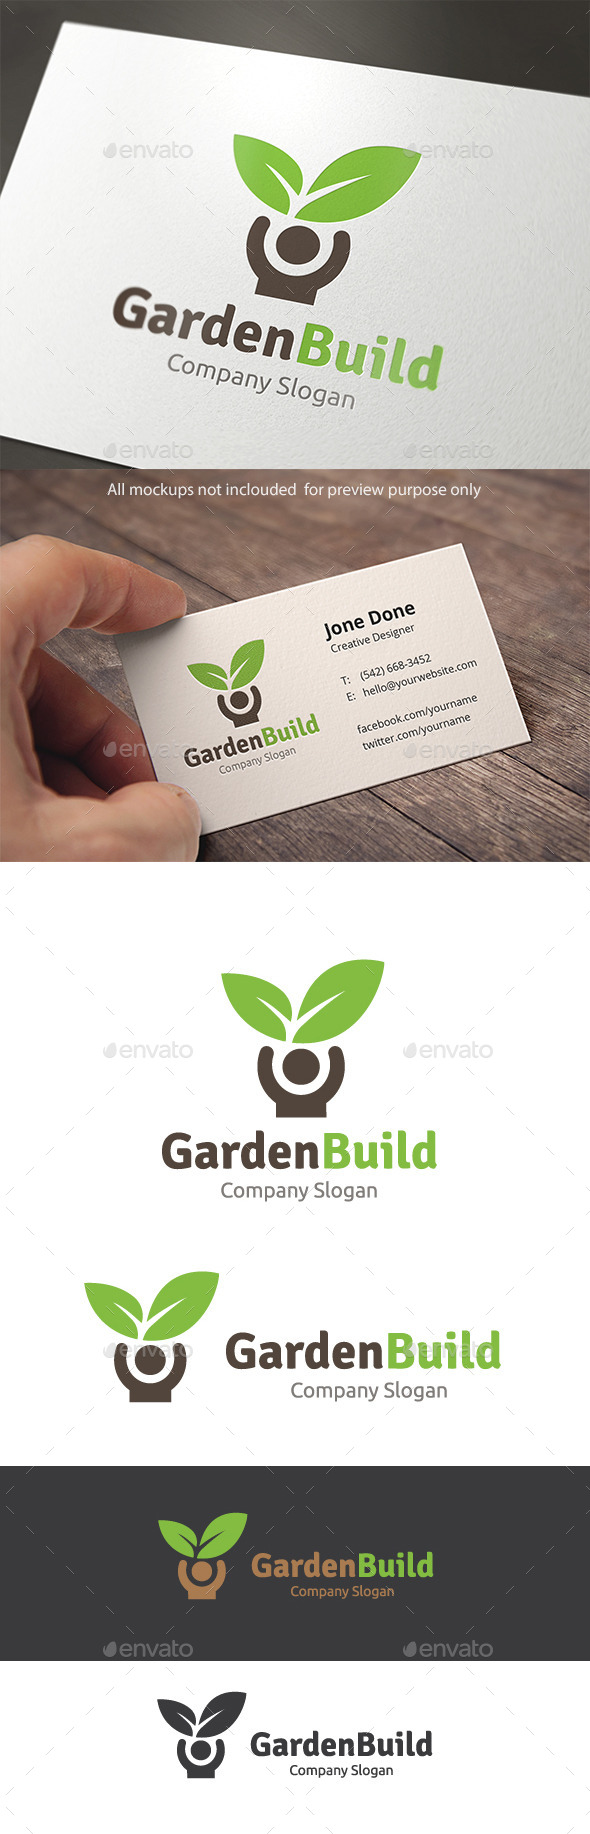 Garden Build